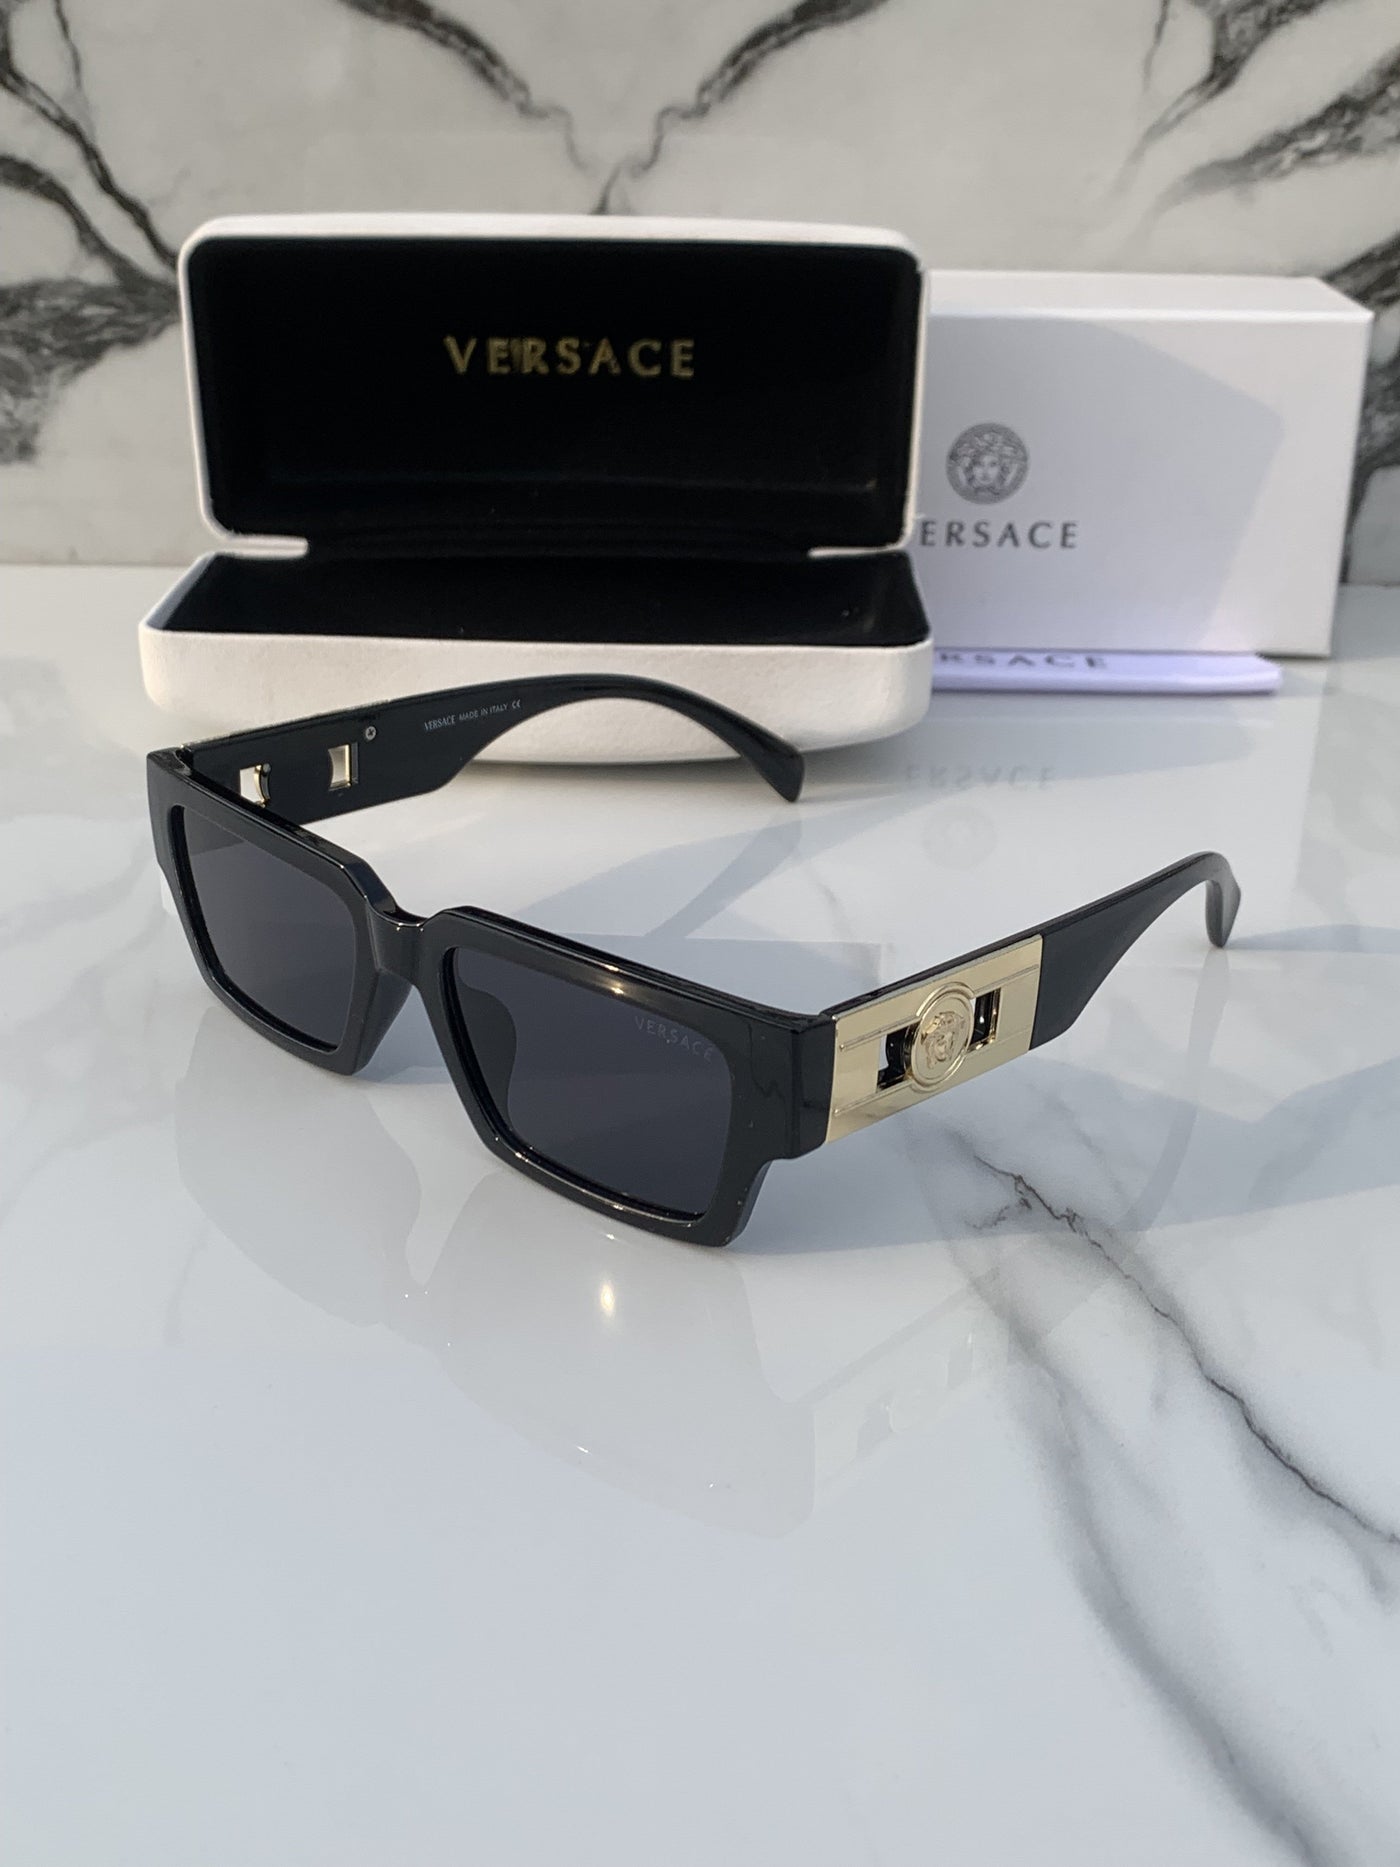 Versace 127 full black